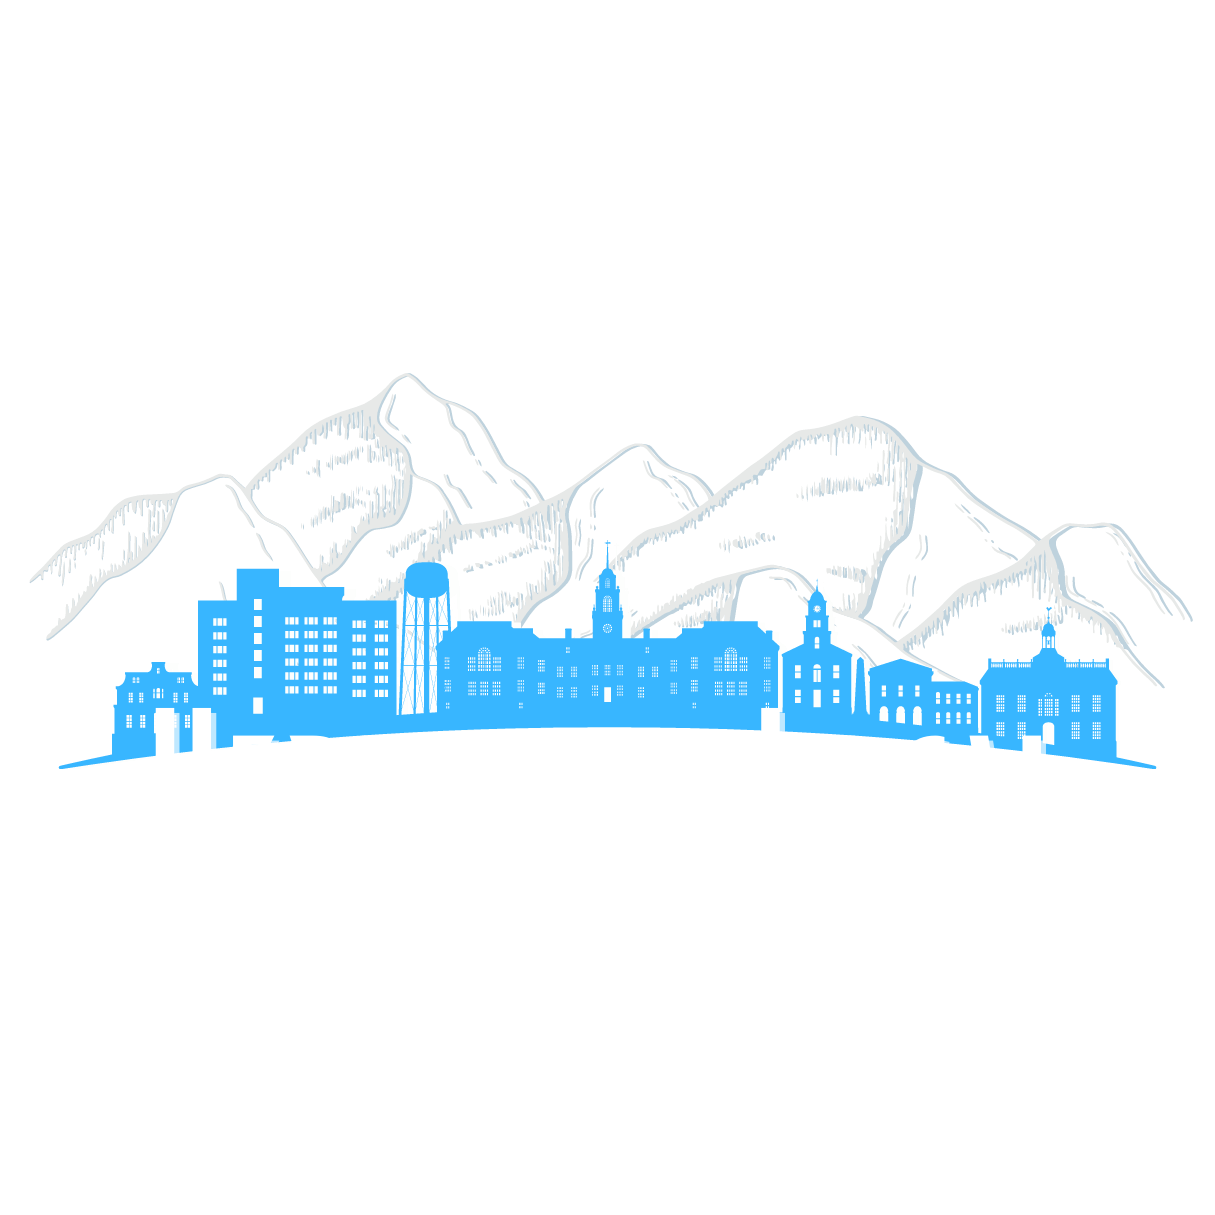 Herriman local businesses